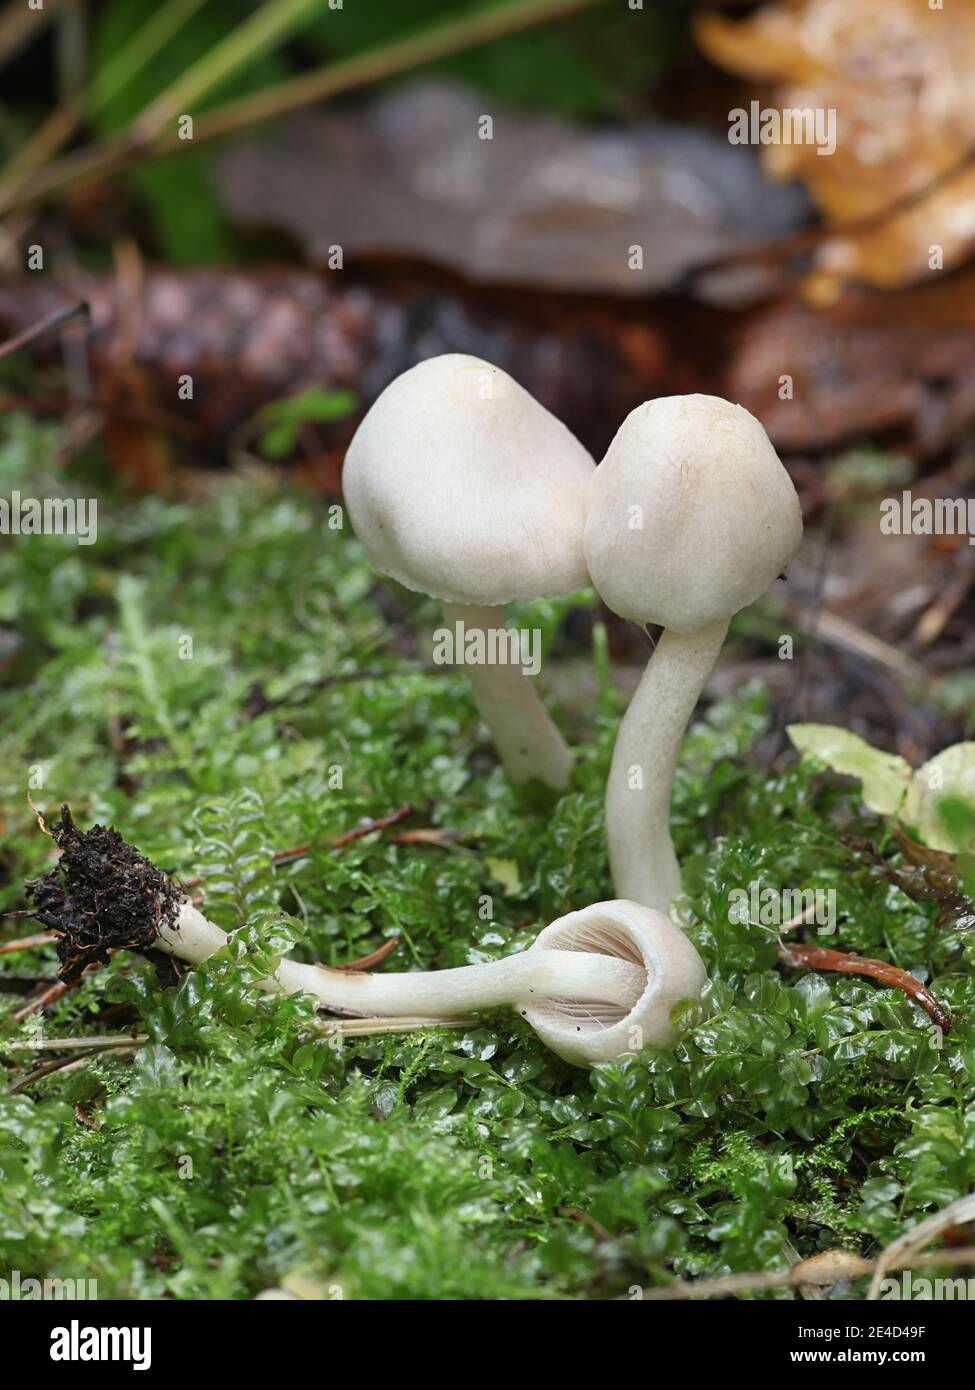 Limacella illinita, known as overflowing slimy stem, wild mushroom from Finland Stock Photo